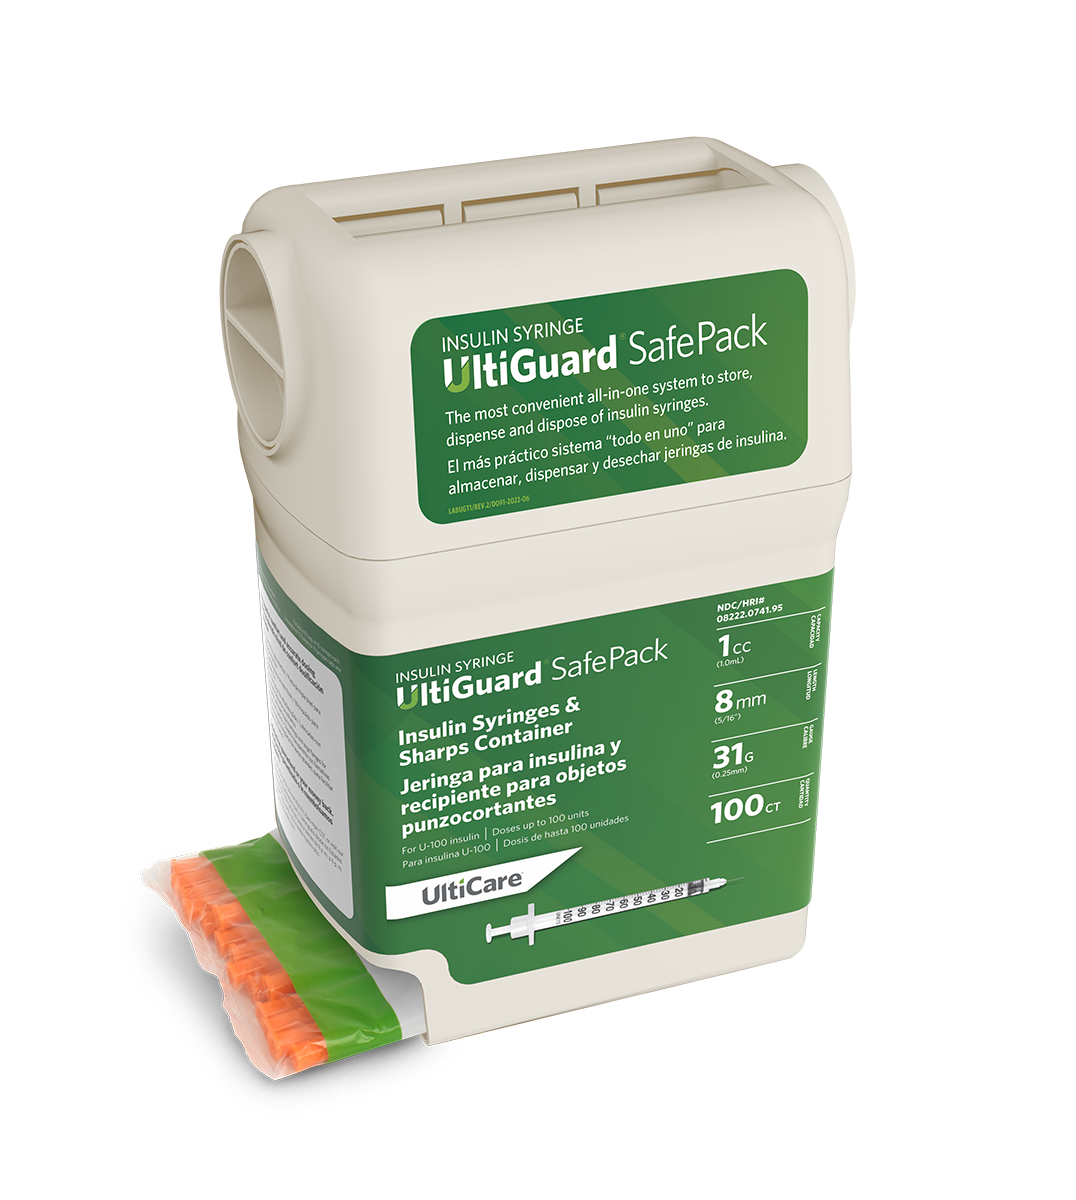 UltiGuard Safe Pack U-100 Insulin Syringes 1 mL/cc 8mm (5/16") x 31G